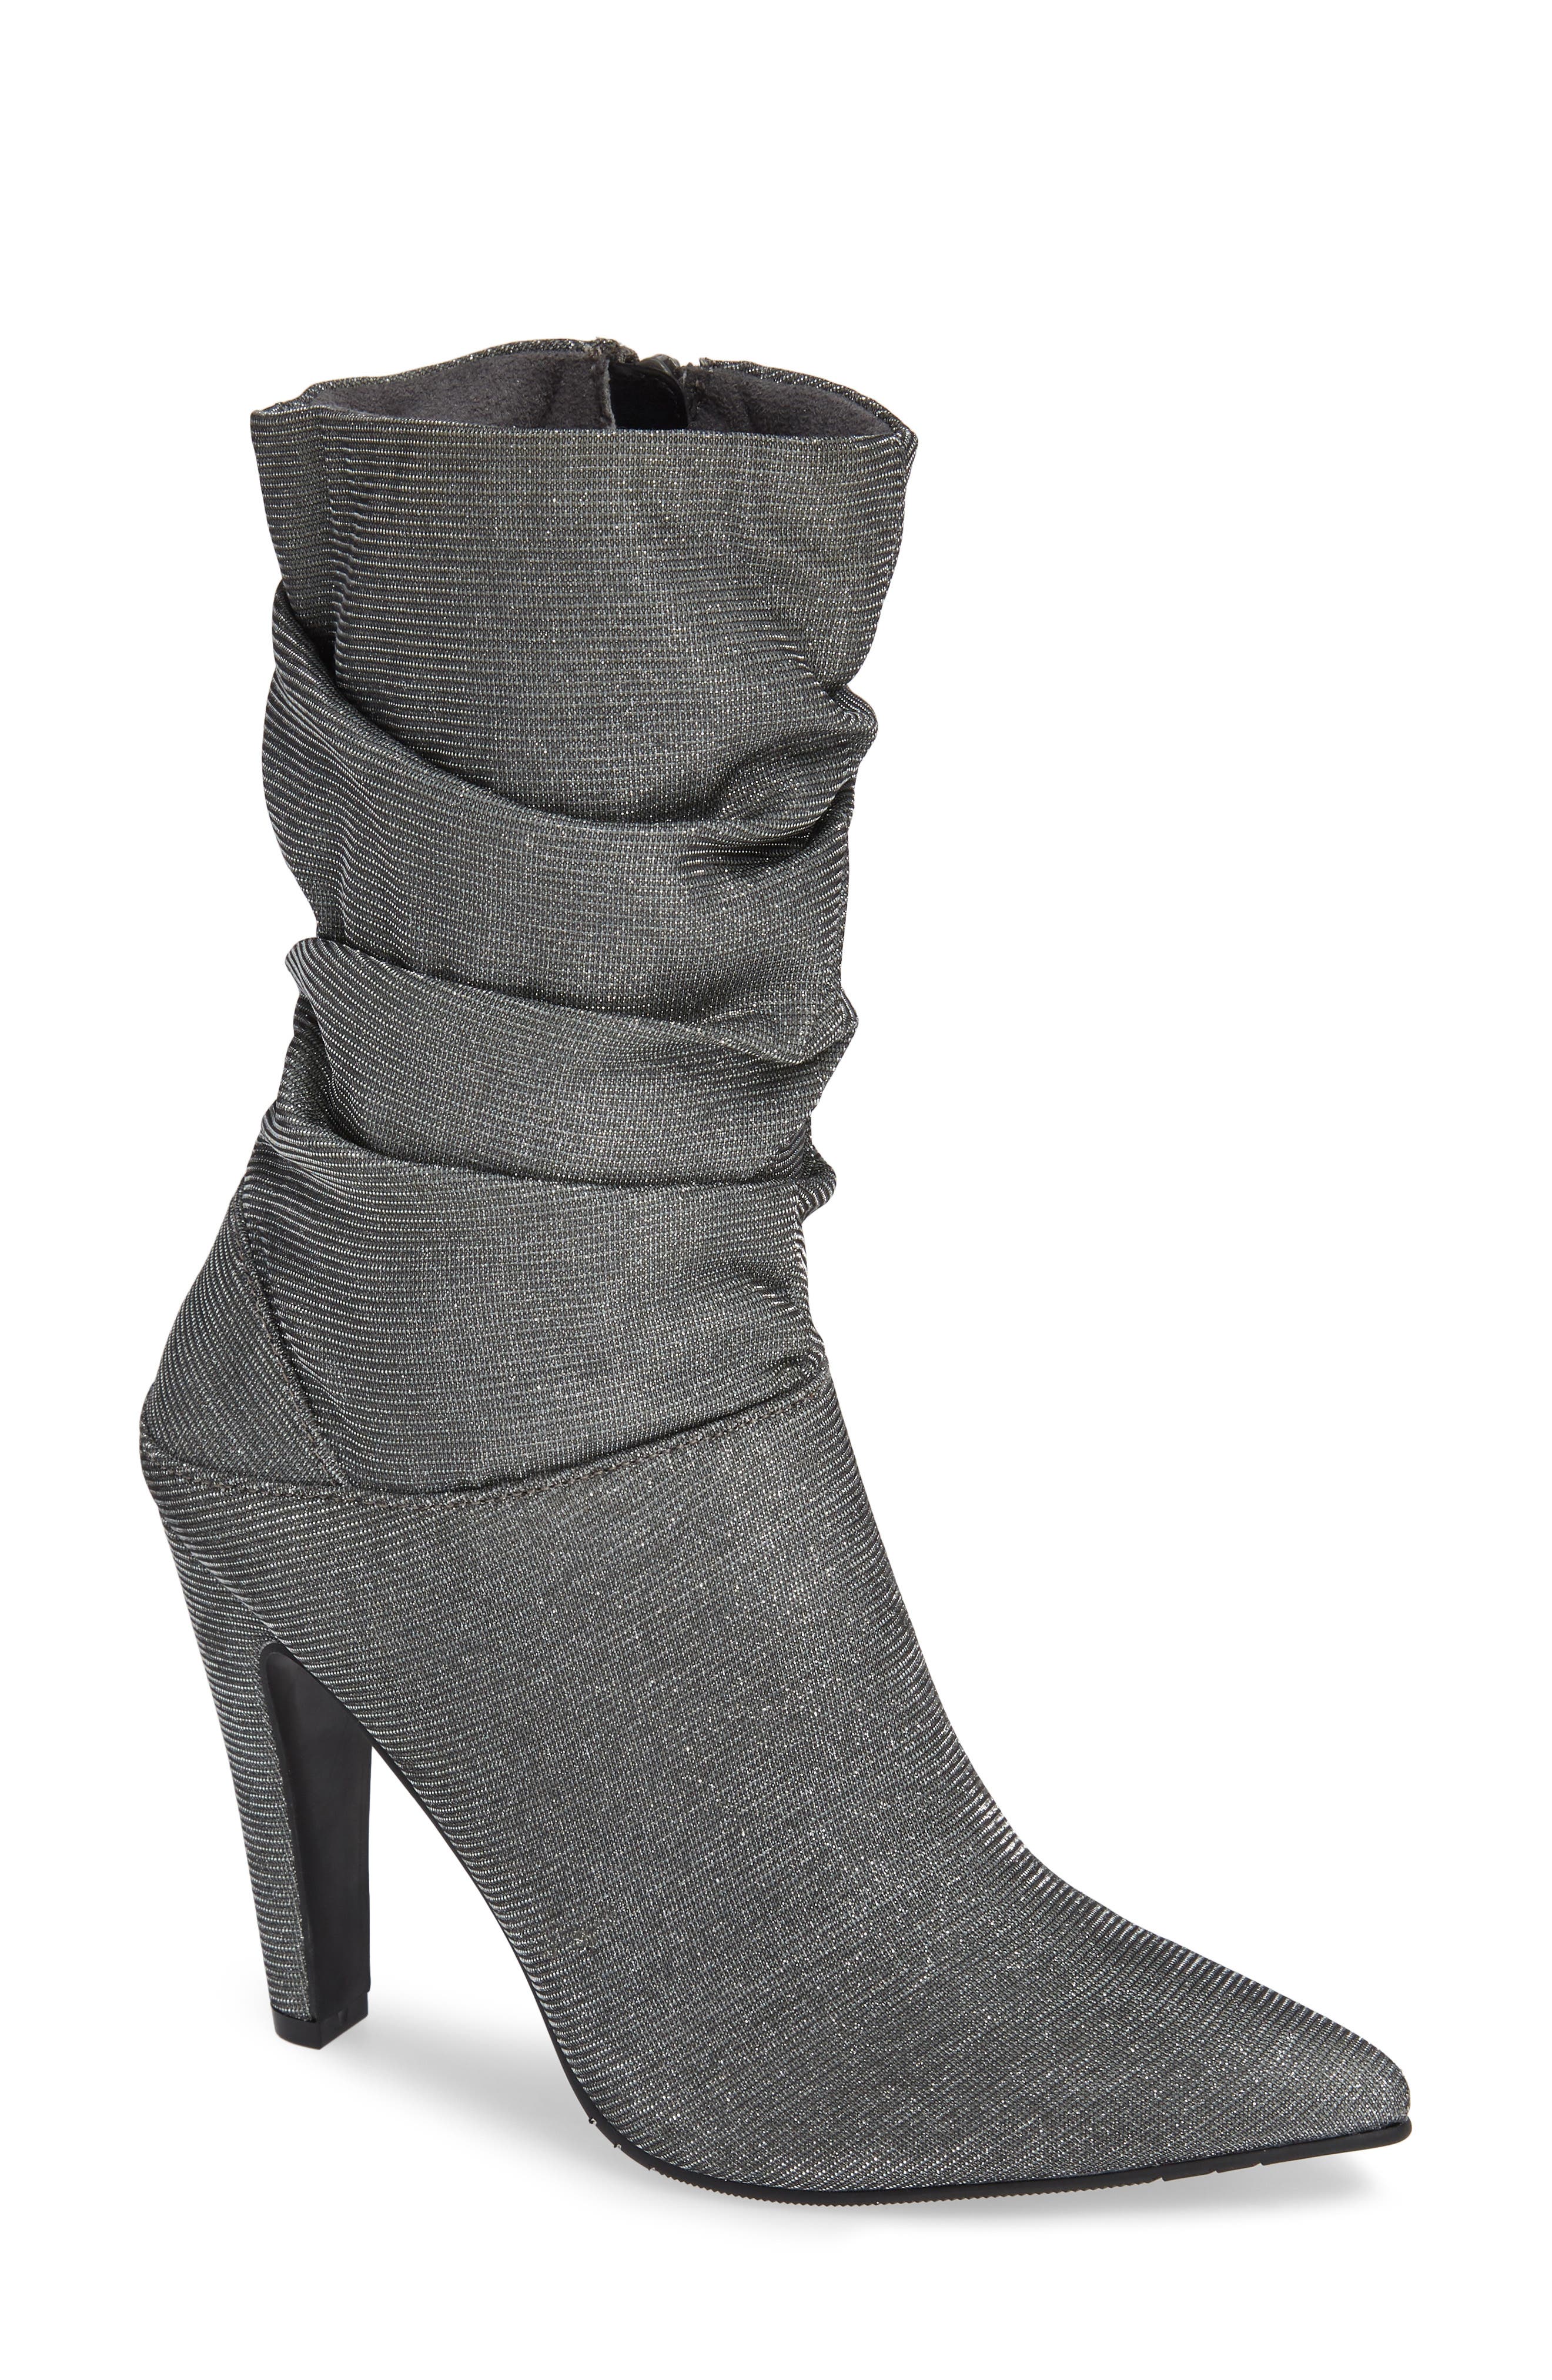 UPC 716142081417 product image for Women's Nina Darla Bootie, Size 9.5 M - Grey | upcitemdb.com